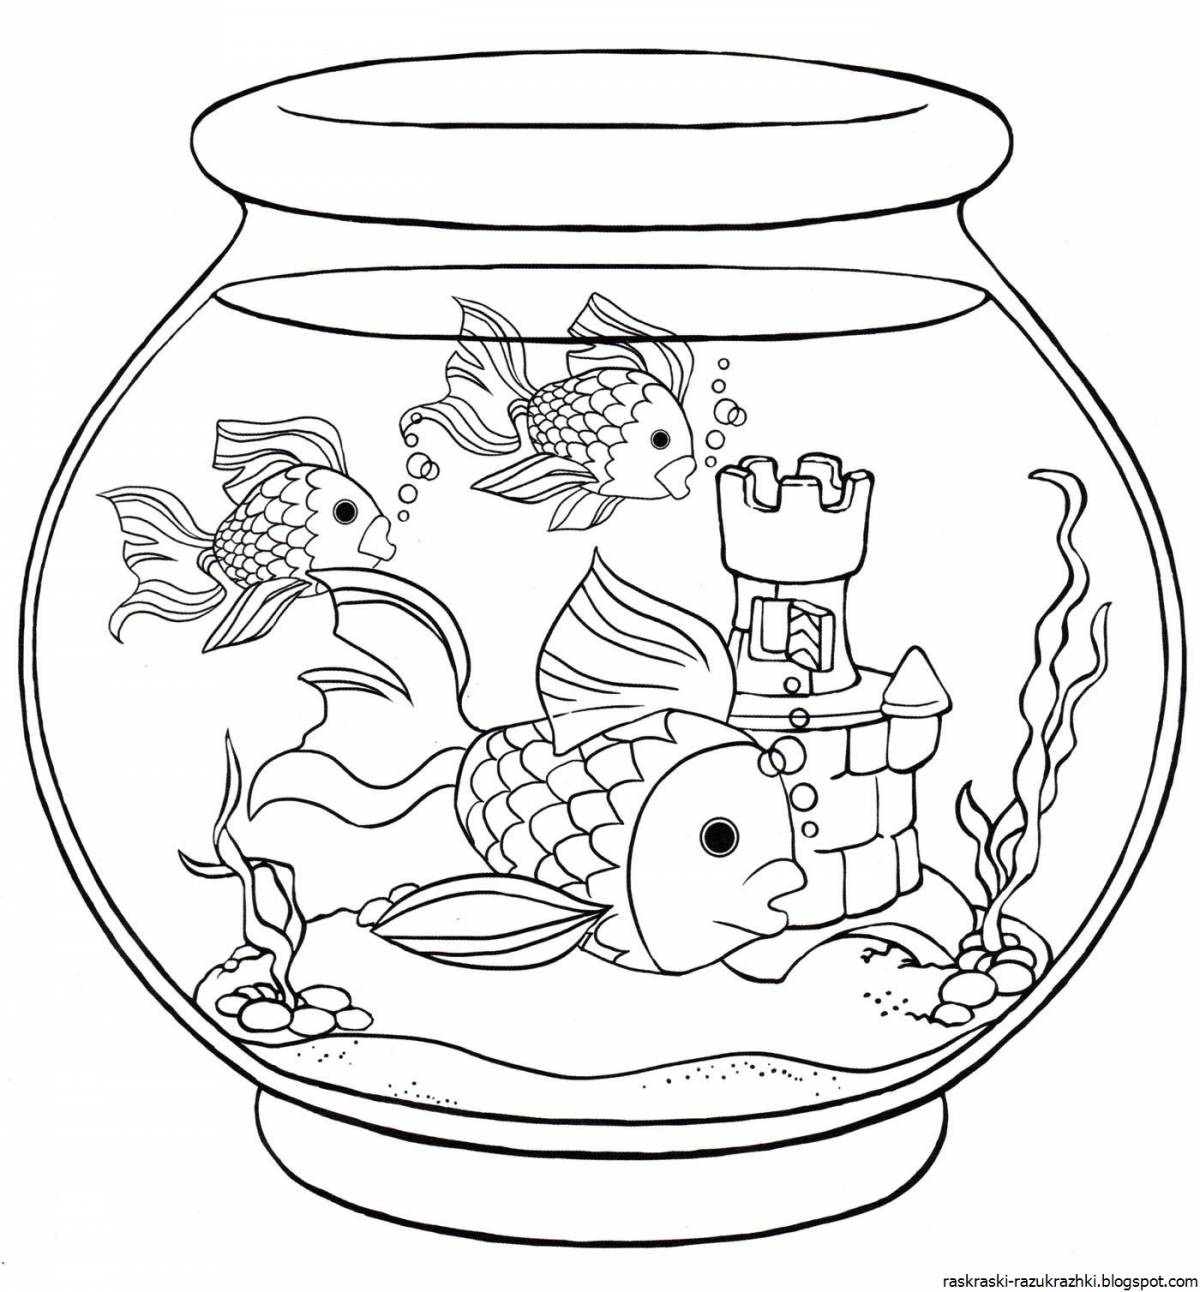 Attractive aquarium coloring book for kids